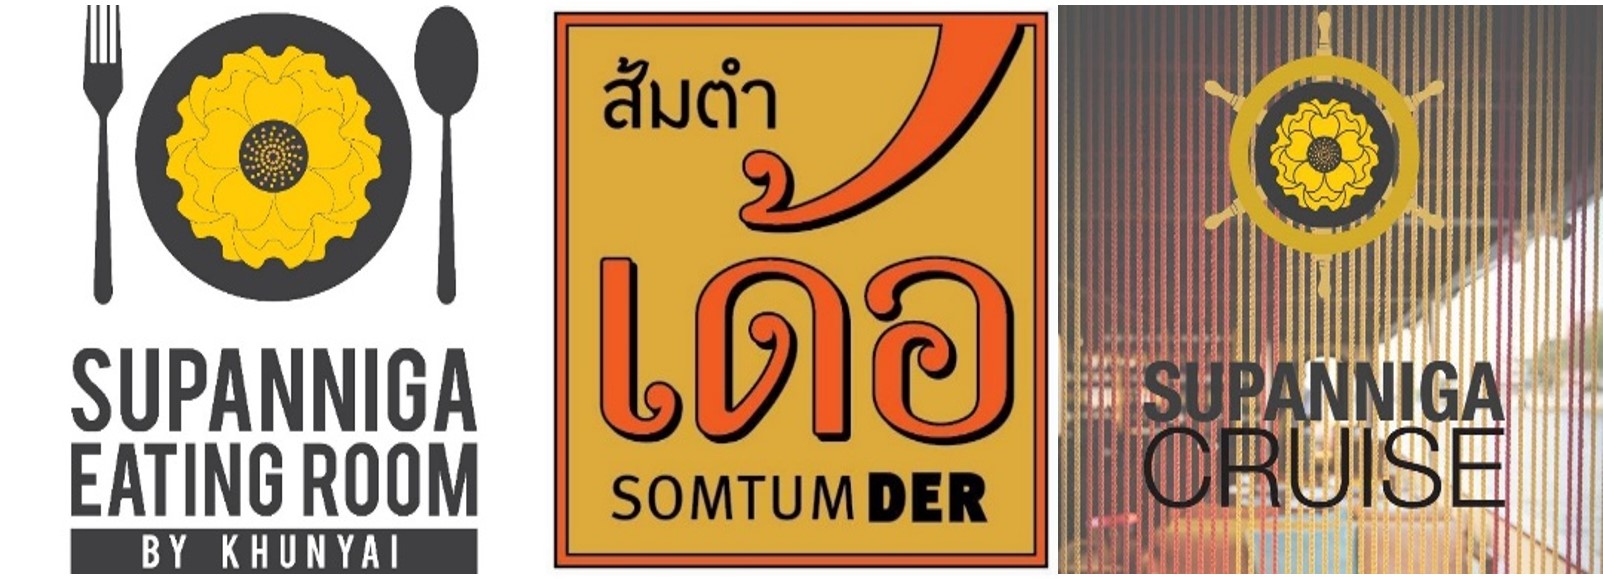 supanniga旗下有着多个子品牌,比如经营泰国东北菜的supanniga eating